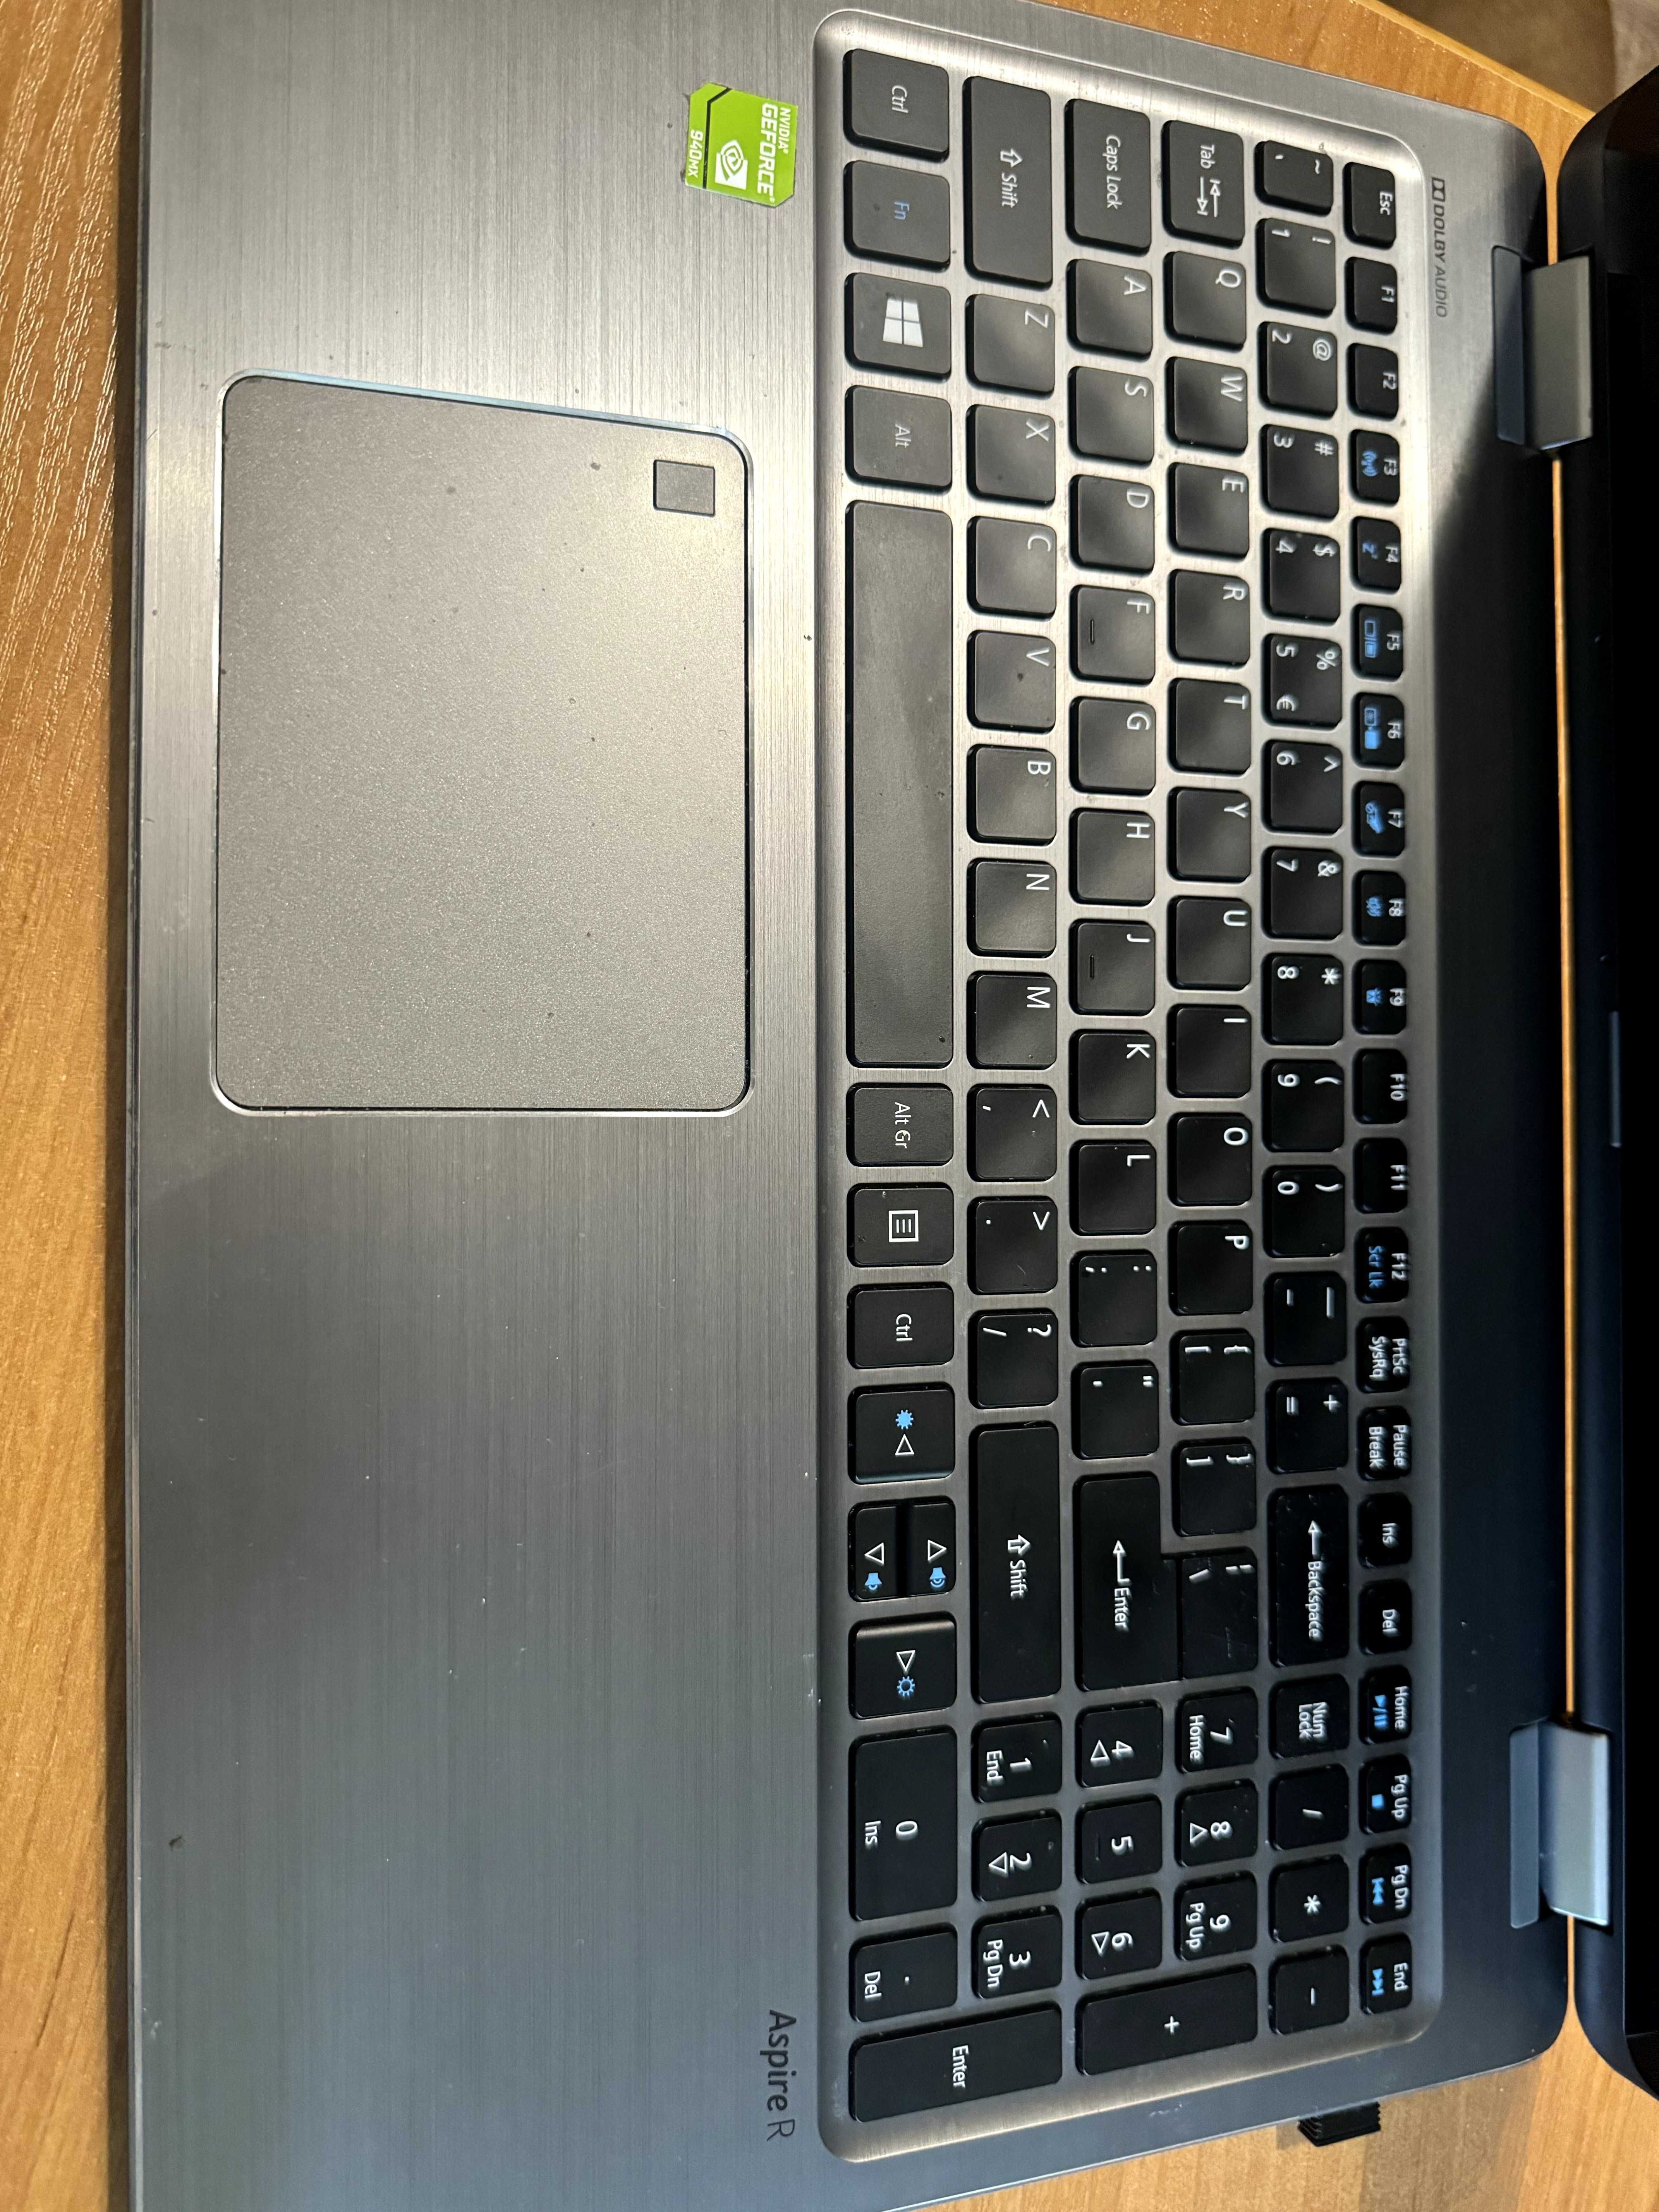 Laptop Acer aspire r5 dotykowy Proc I5-7200, Geforce 940 MX, SSD +HDD